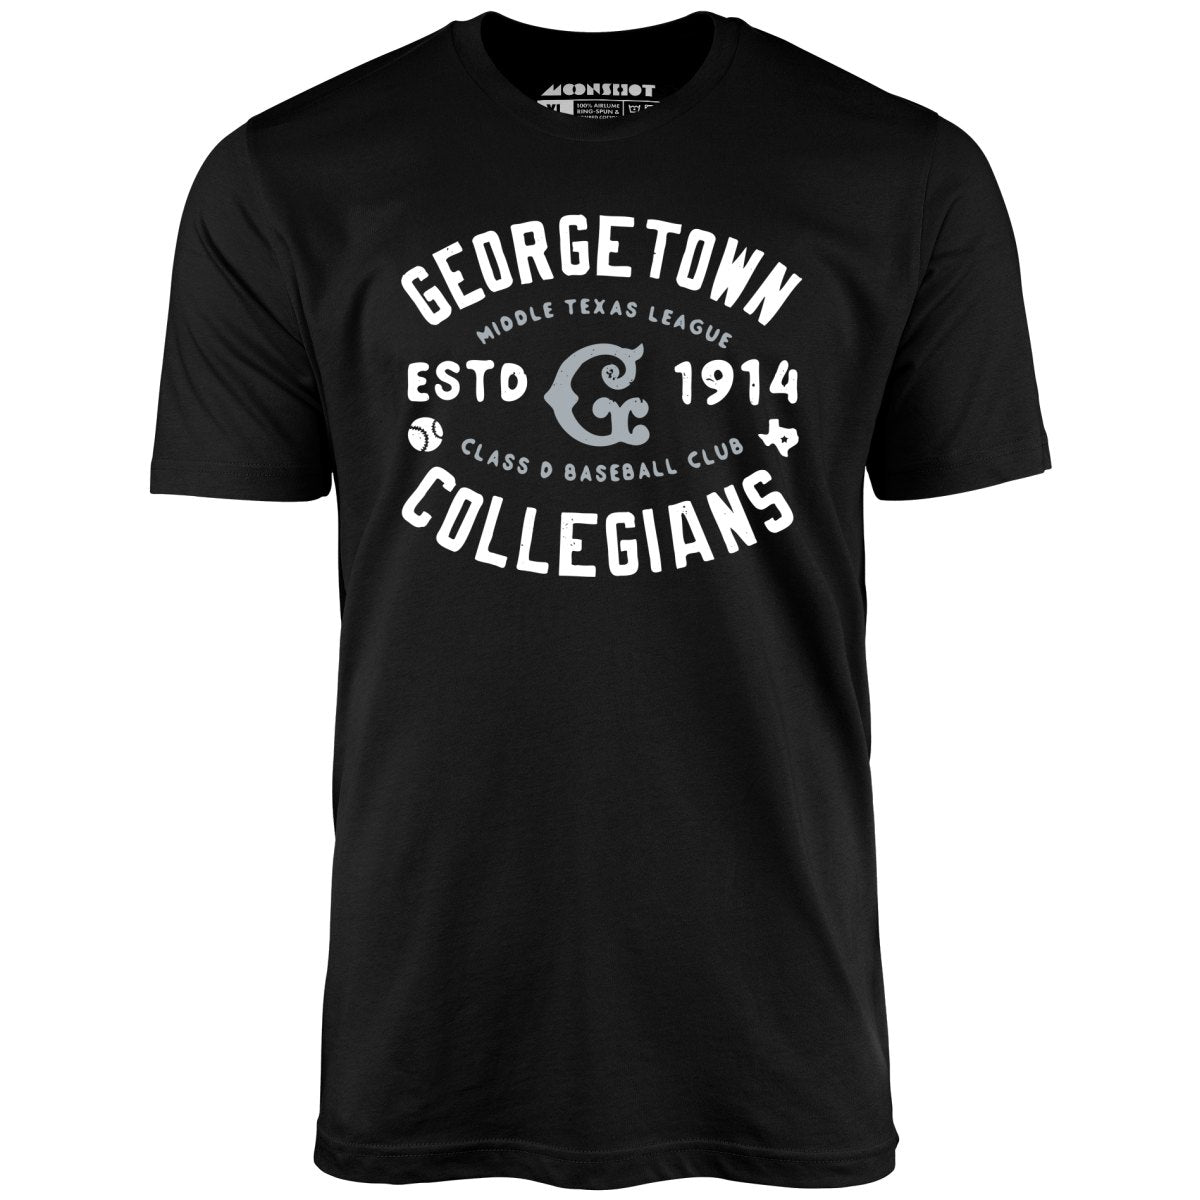 Georgetown Collegians - Texas - Vintage Defunct Baseball Teams - Unisex T-Shirt